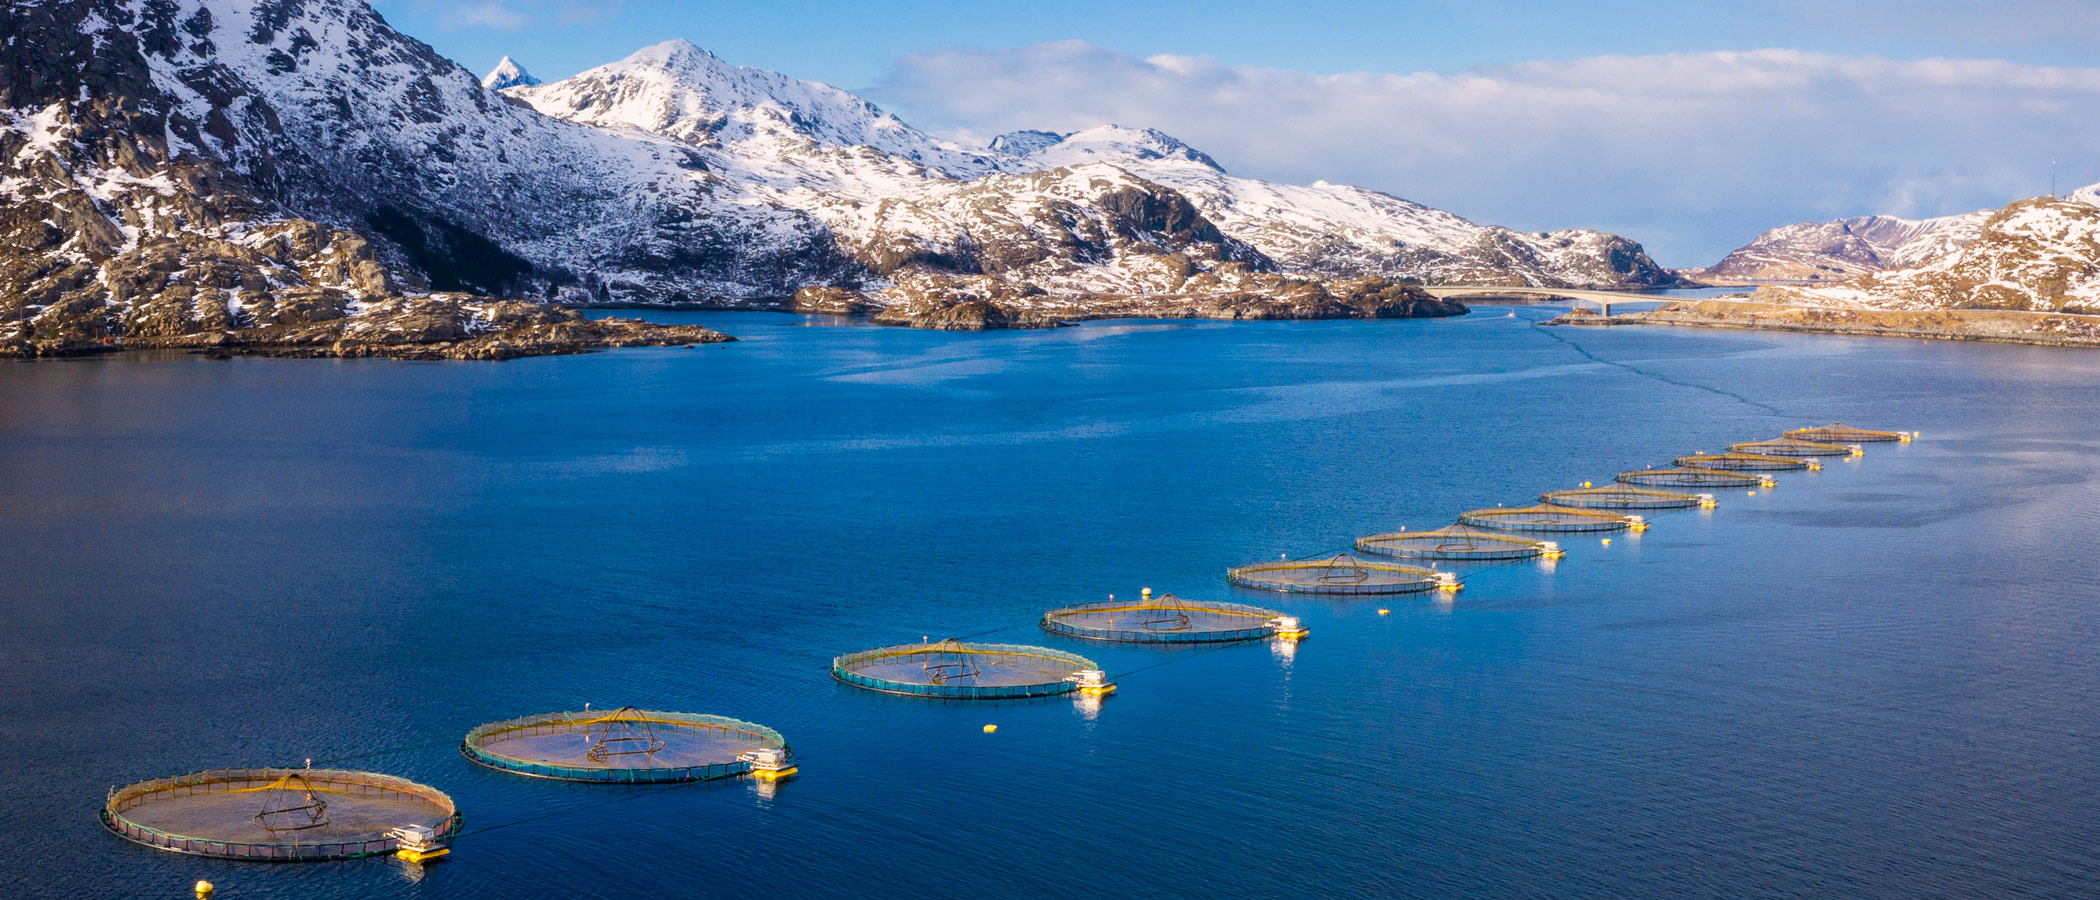 Improved aquaculture